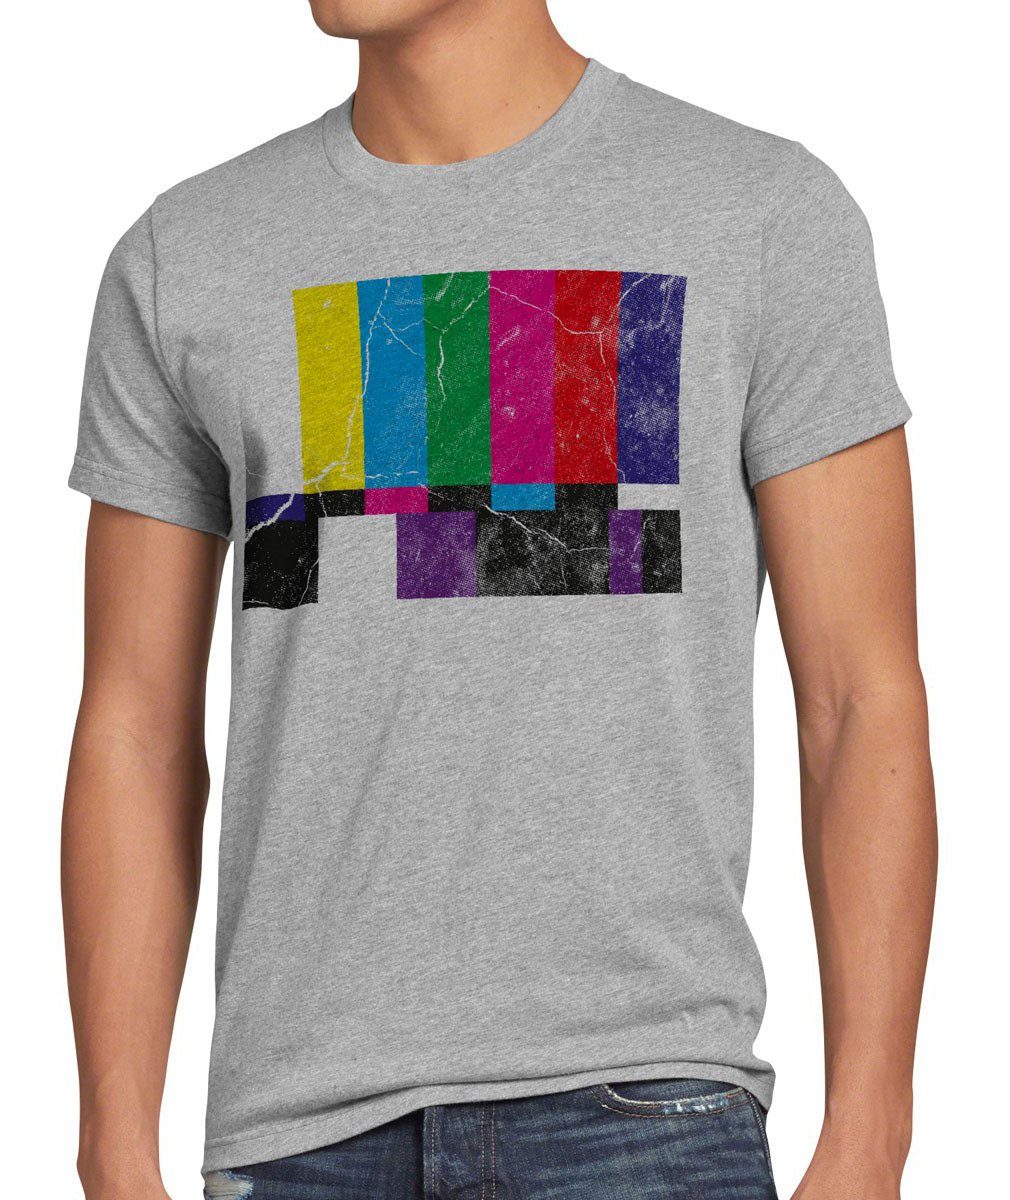 style3 Print-Shirt Herren T-Shirt Retro Testbild Big Bang Sheldon TV Monitor Fernseher LED Theory grau meliert